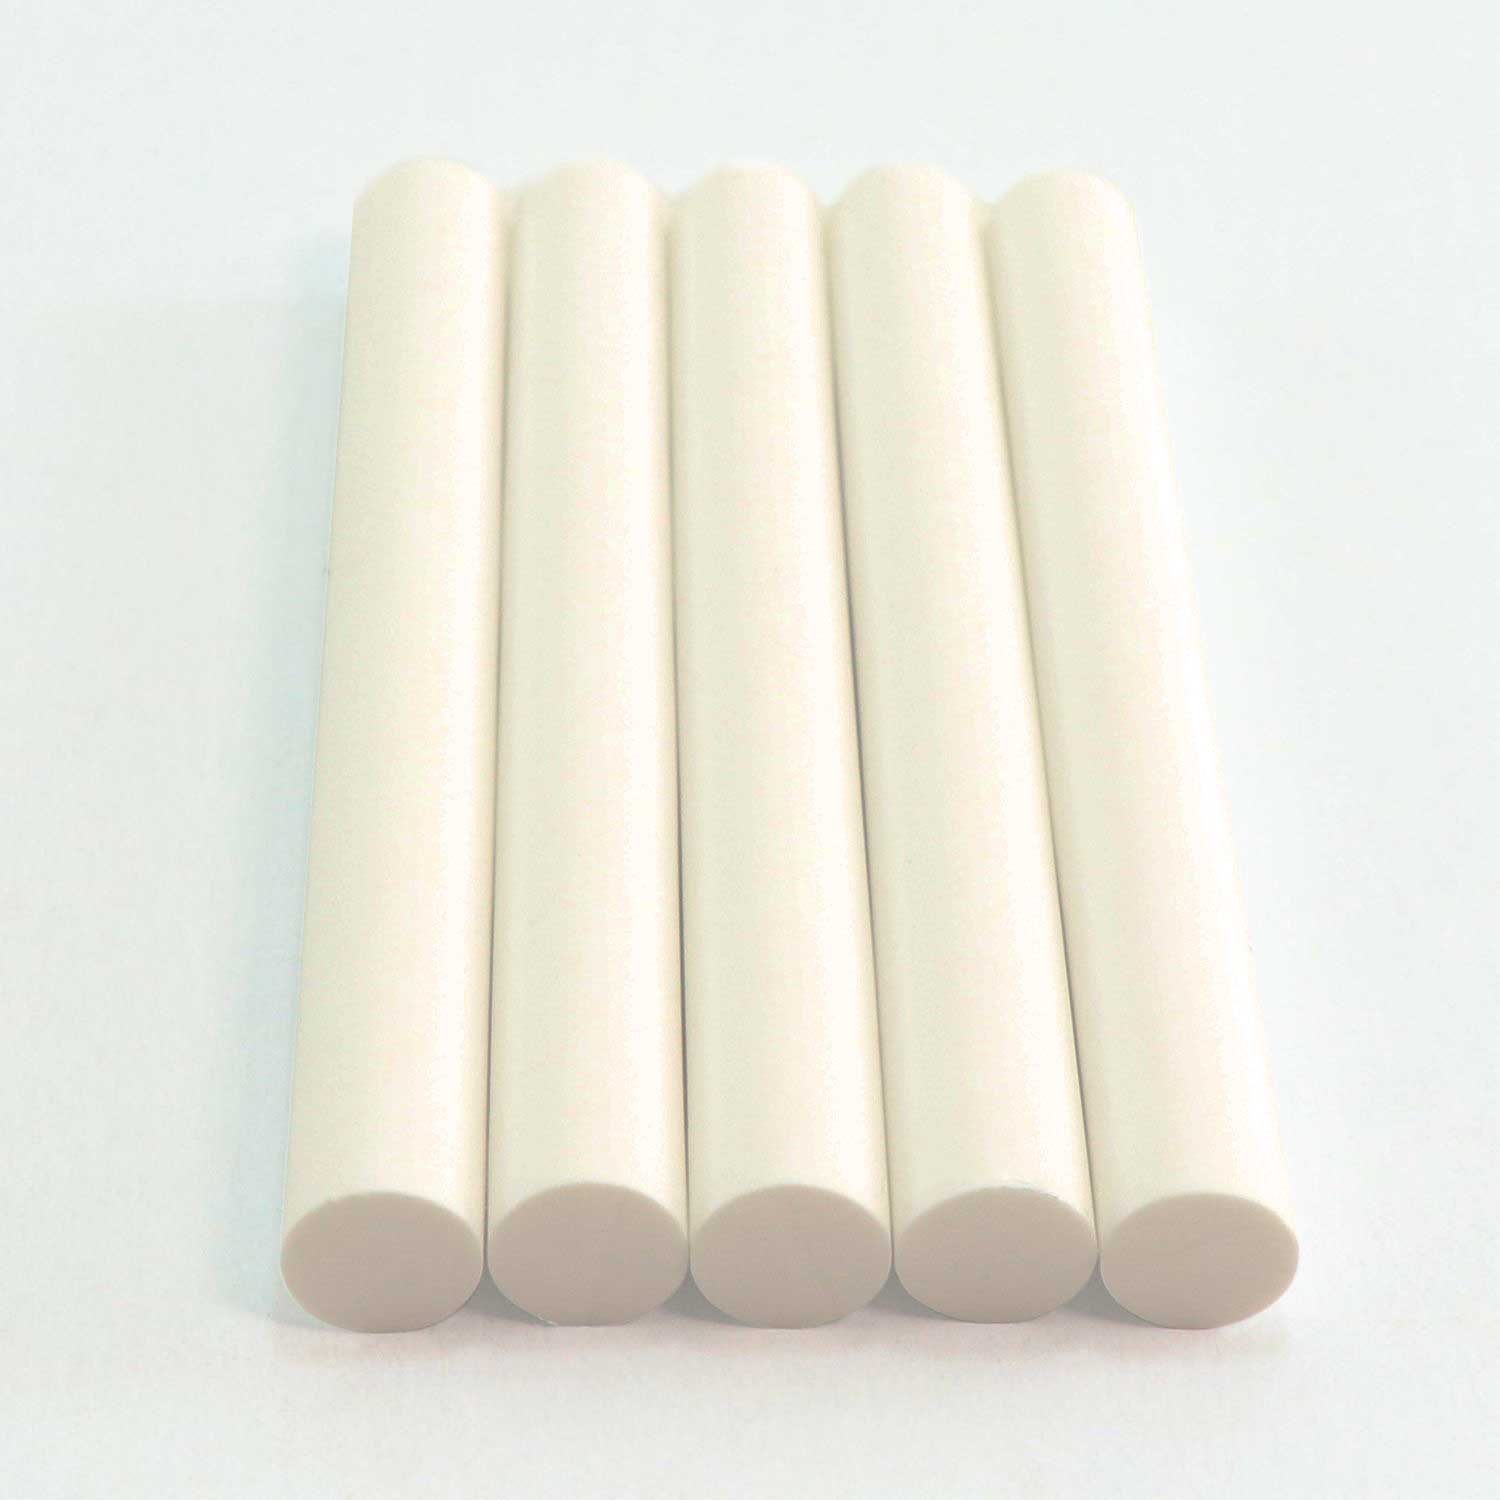 Craftright 10.8 x 100mm Glue Stick - 12 Pack - Bunnings Australia